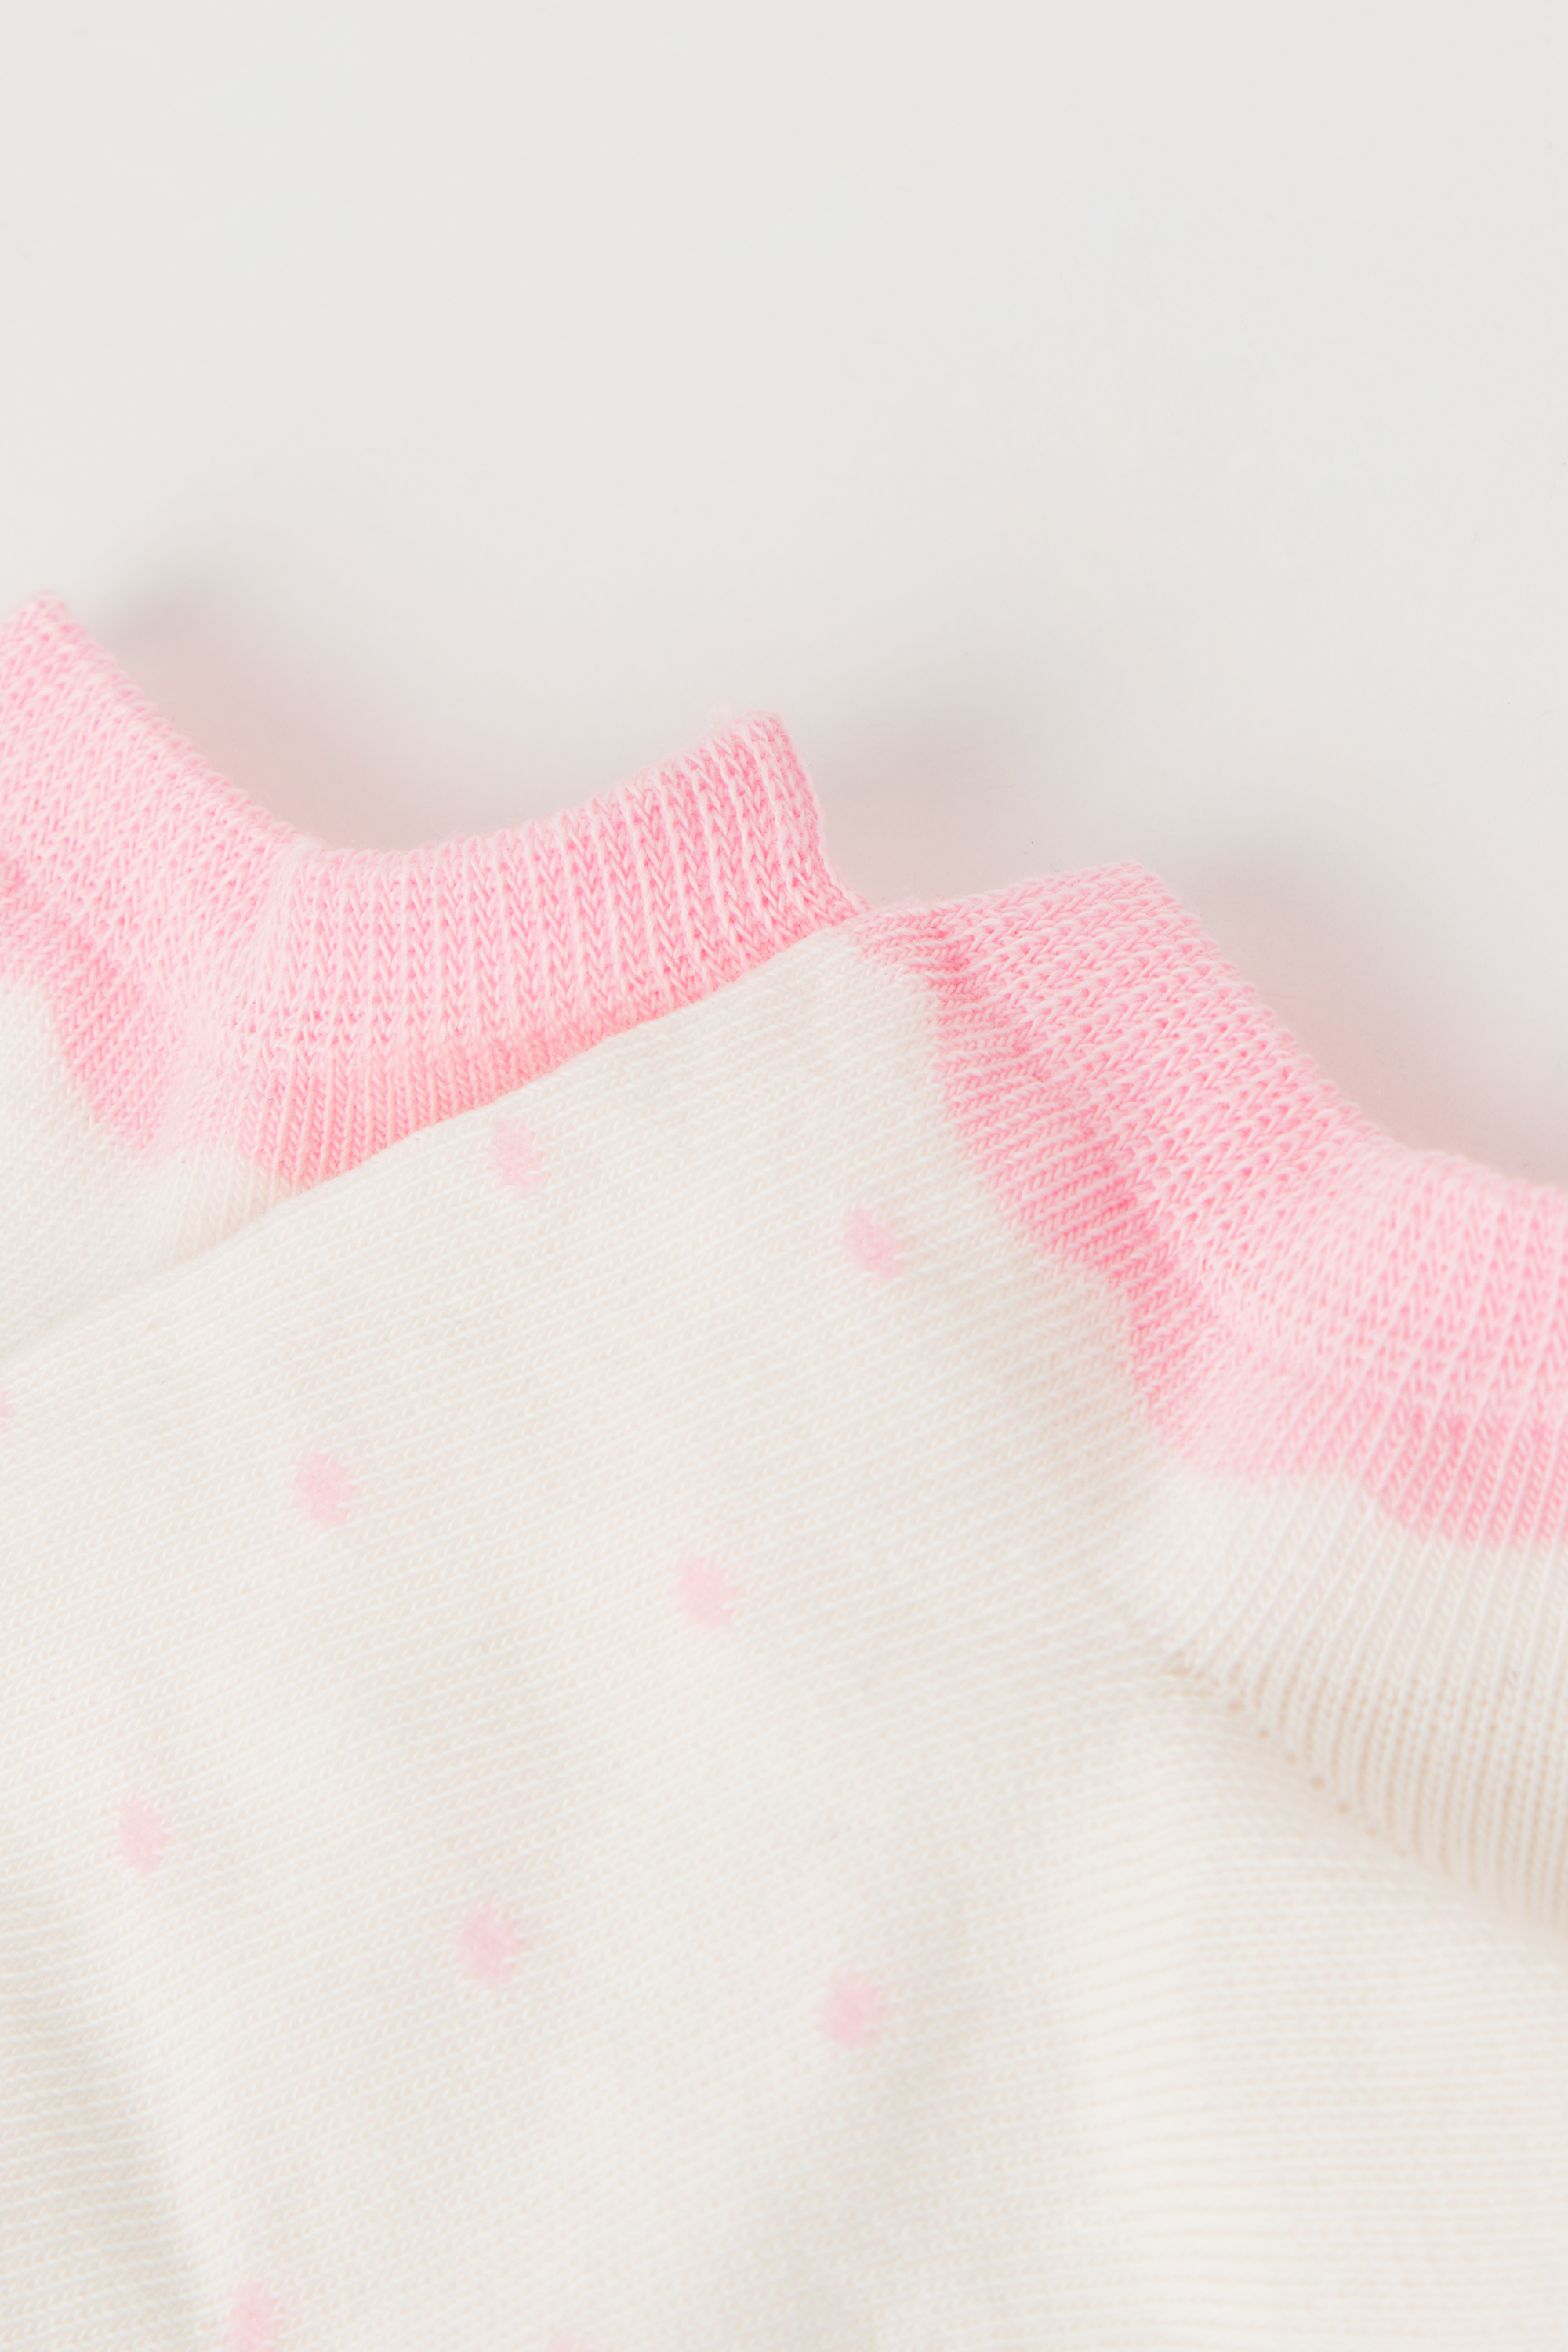 Girls’ Patterned Cotton Trainer Socks